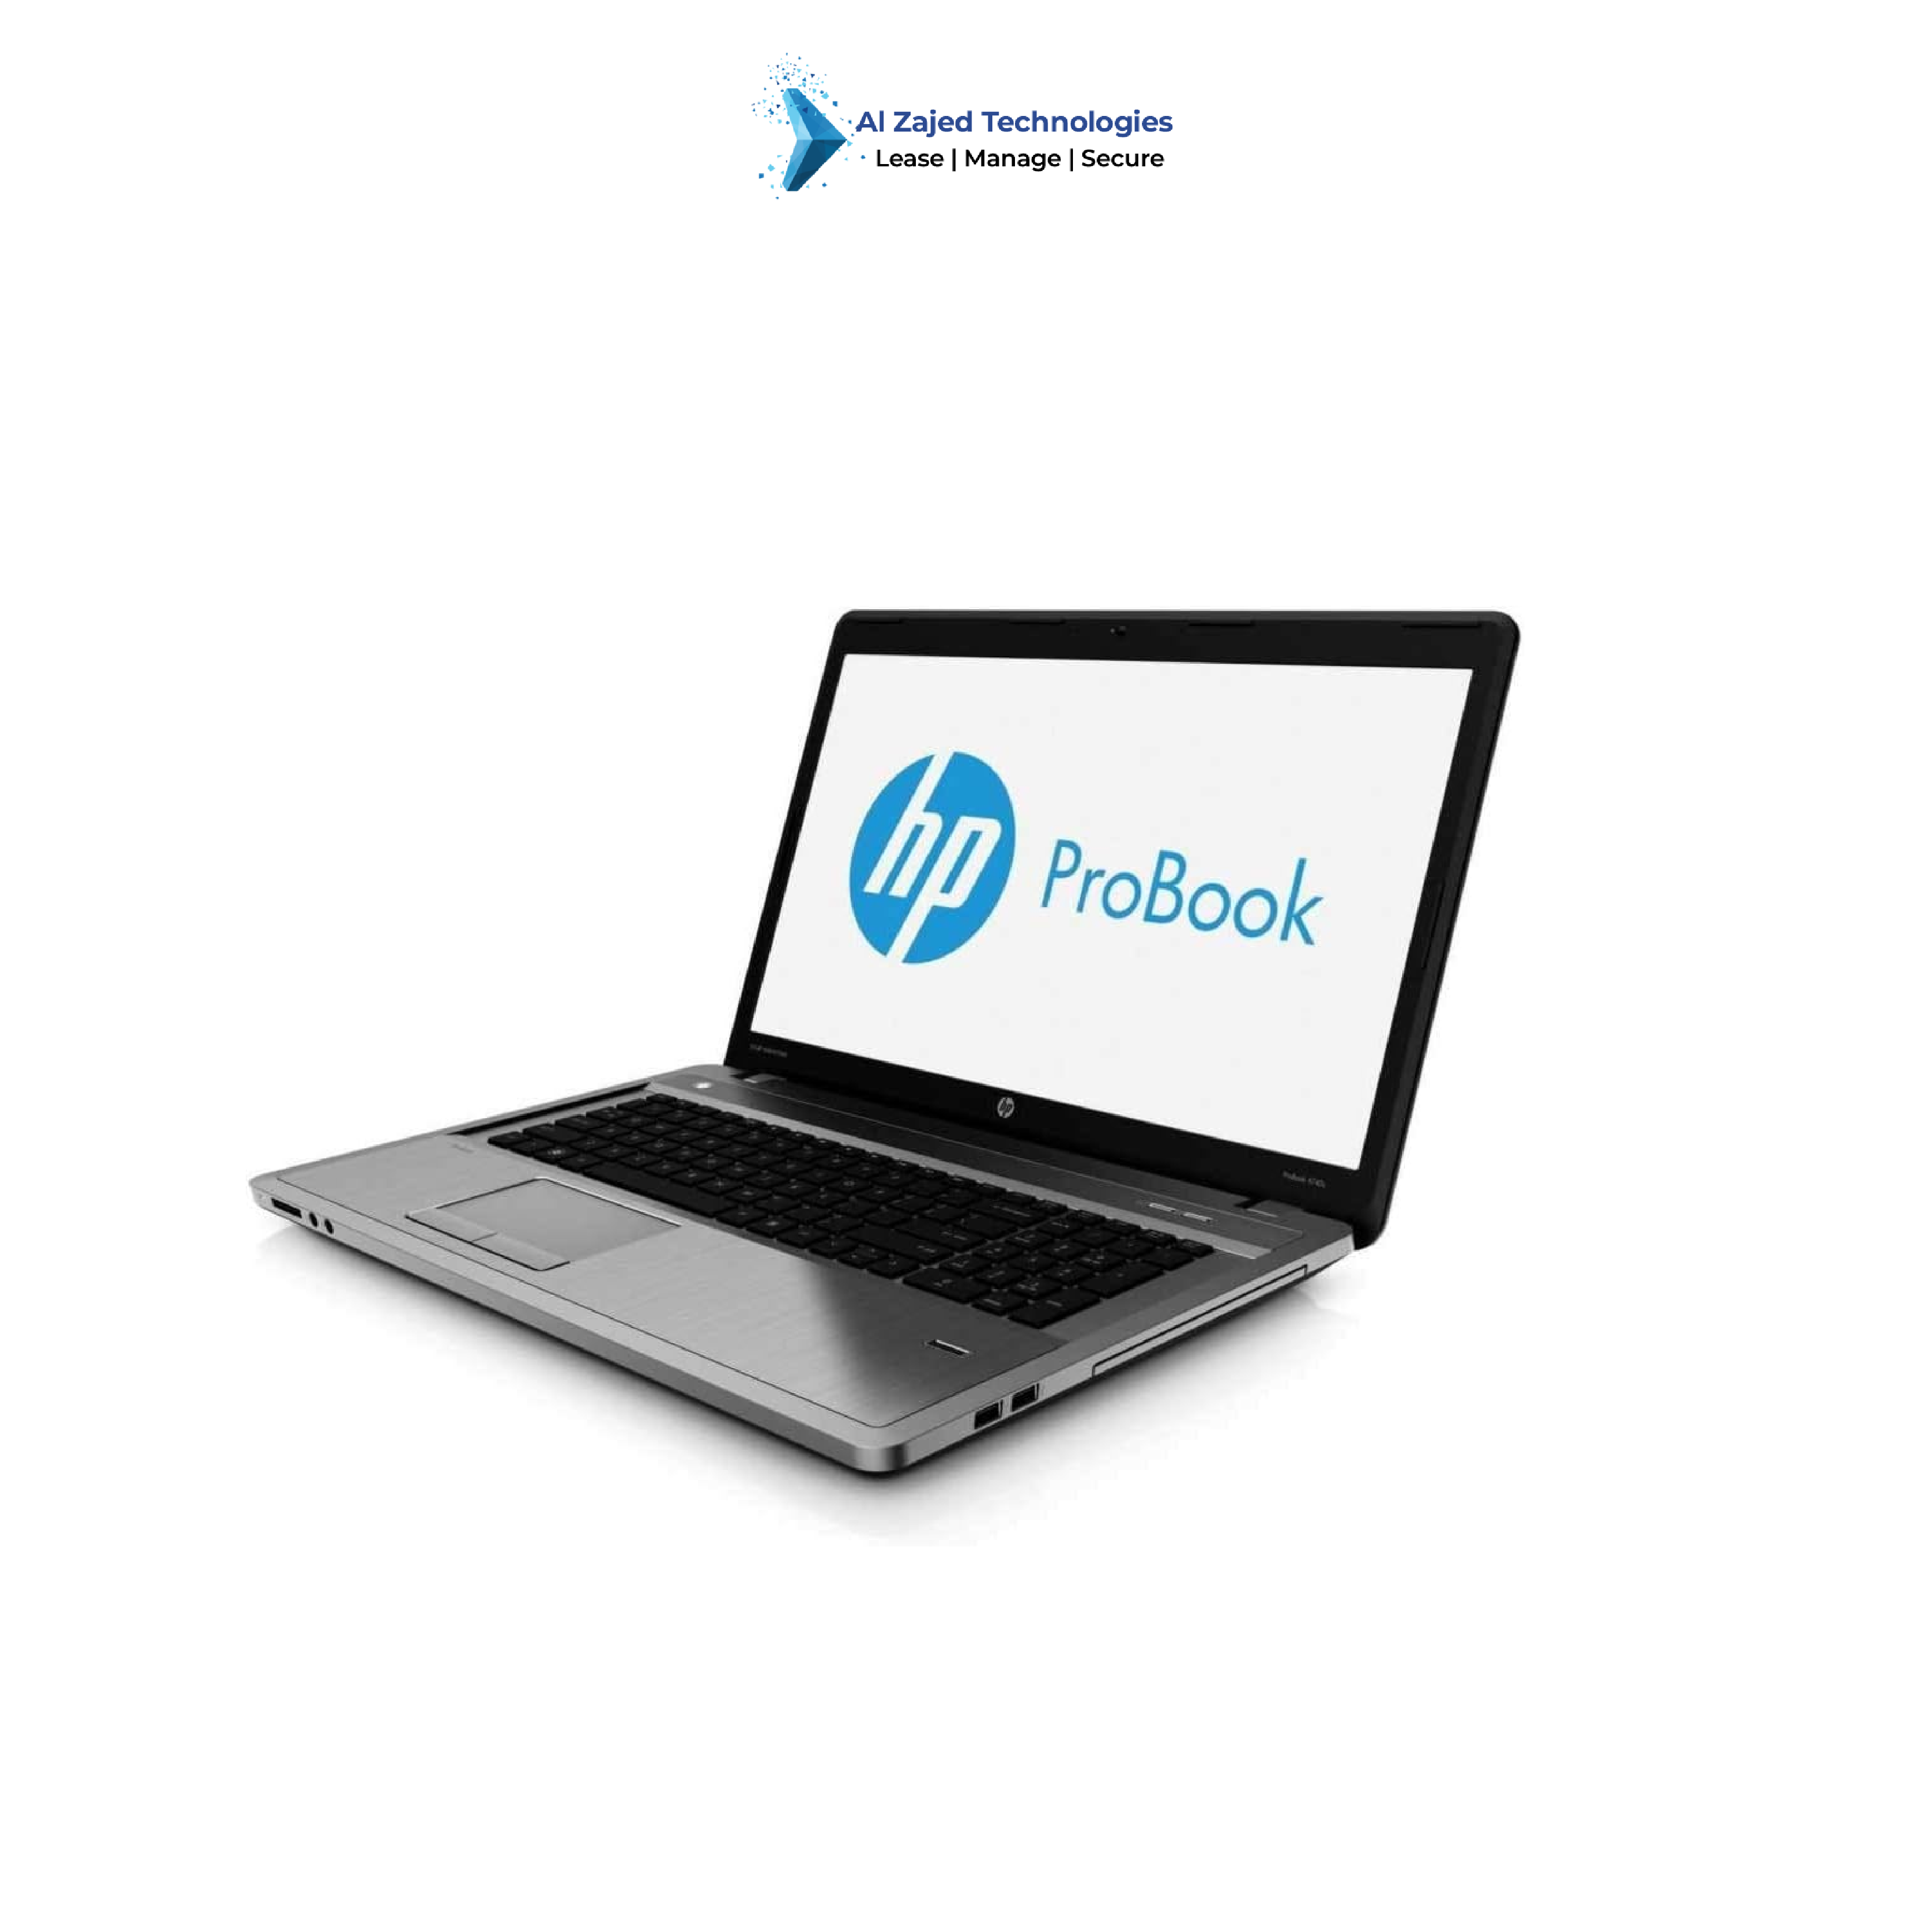 HP ProBook 450 G2 Laptop | Laptops Under 2000AED | Al Zajed